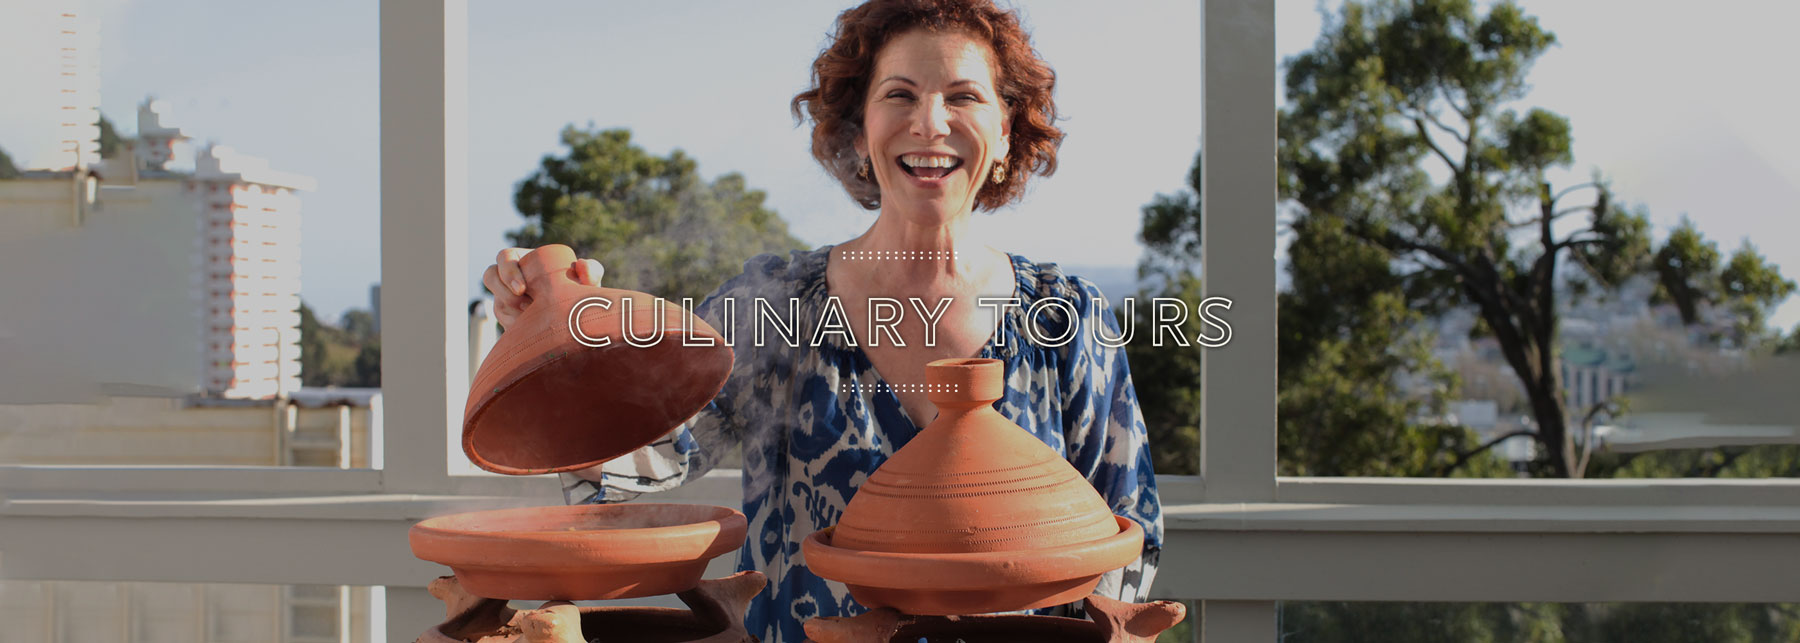 Joanne Weir Culinary Tours